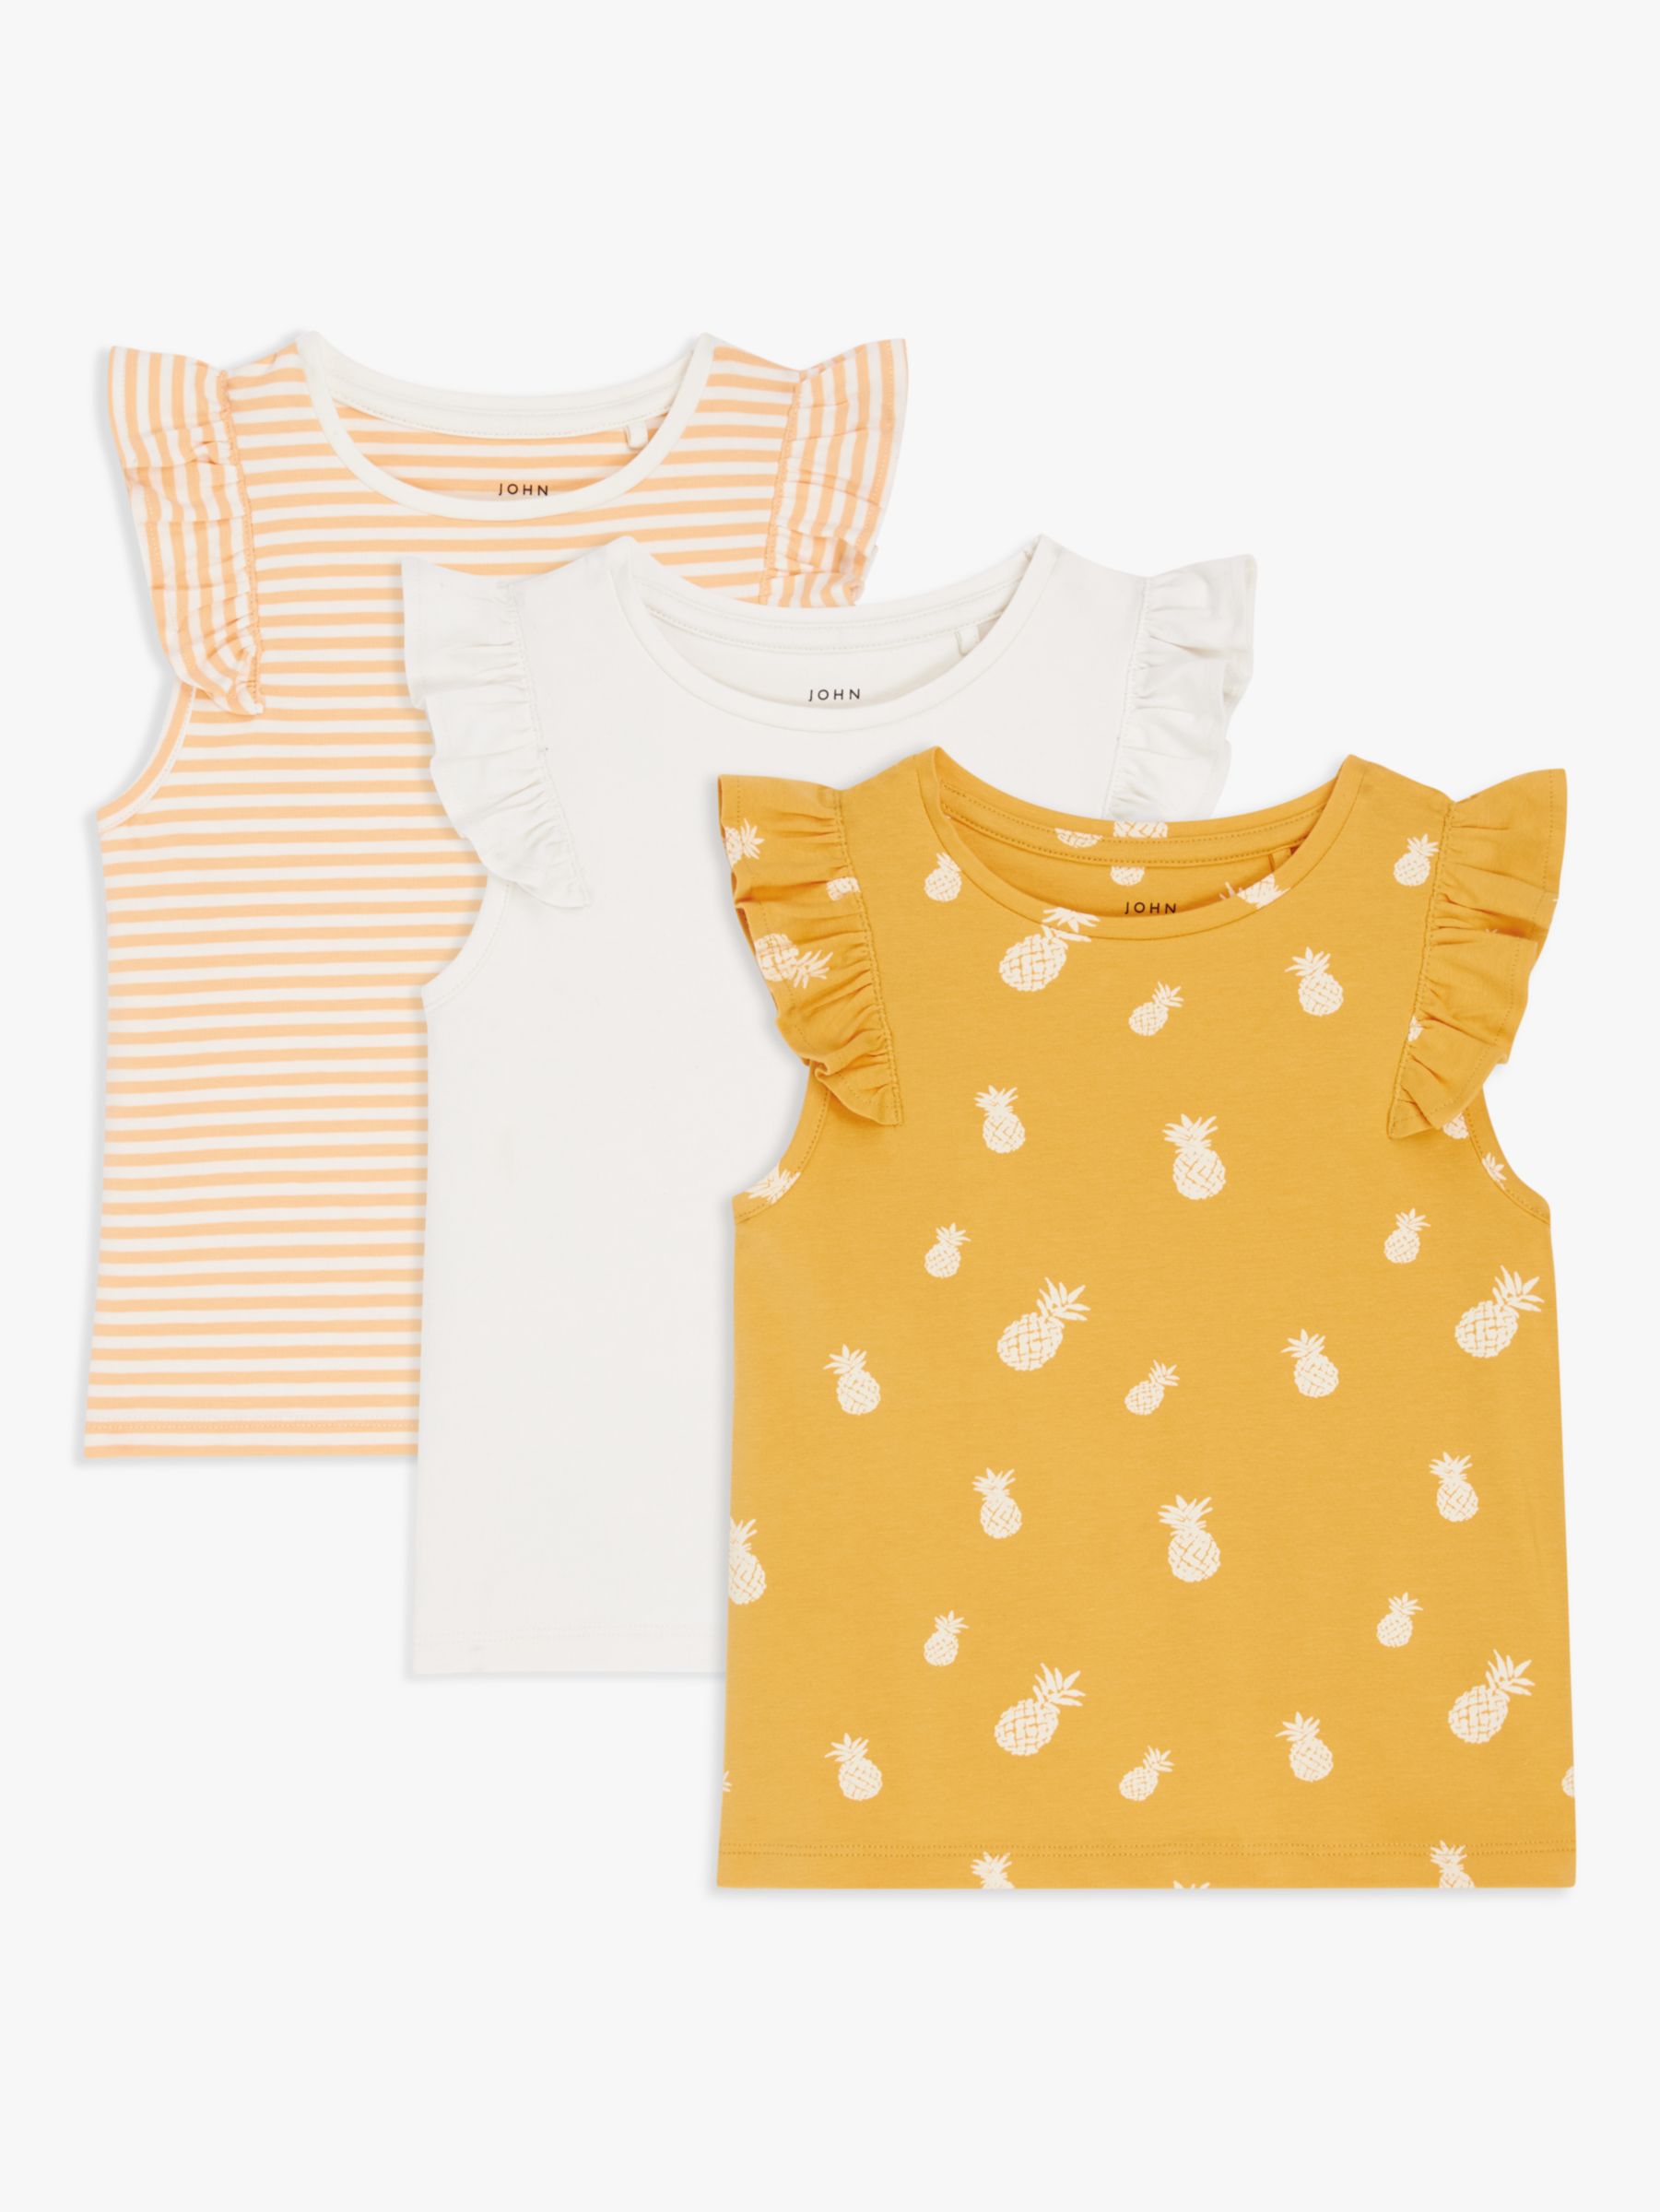 John Lewis Kids' Stripe/Plain/Pineapple Frill Sleeve T-Shirts, Pack of 3, Multi